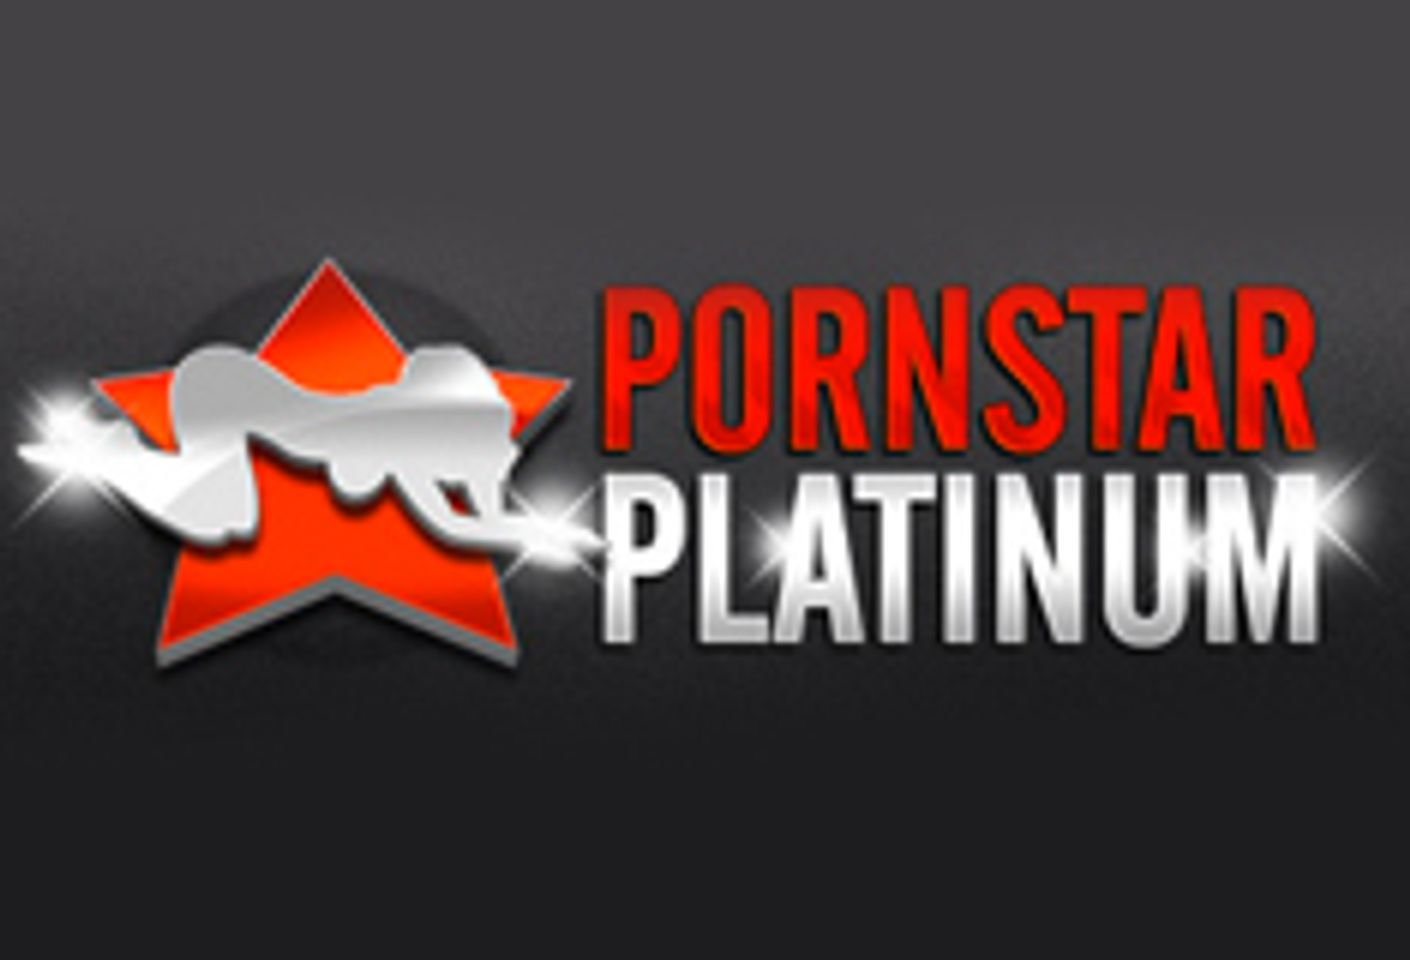 PornStarPlatinum.com Signs Tiffany Tyler, Launches Official Site